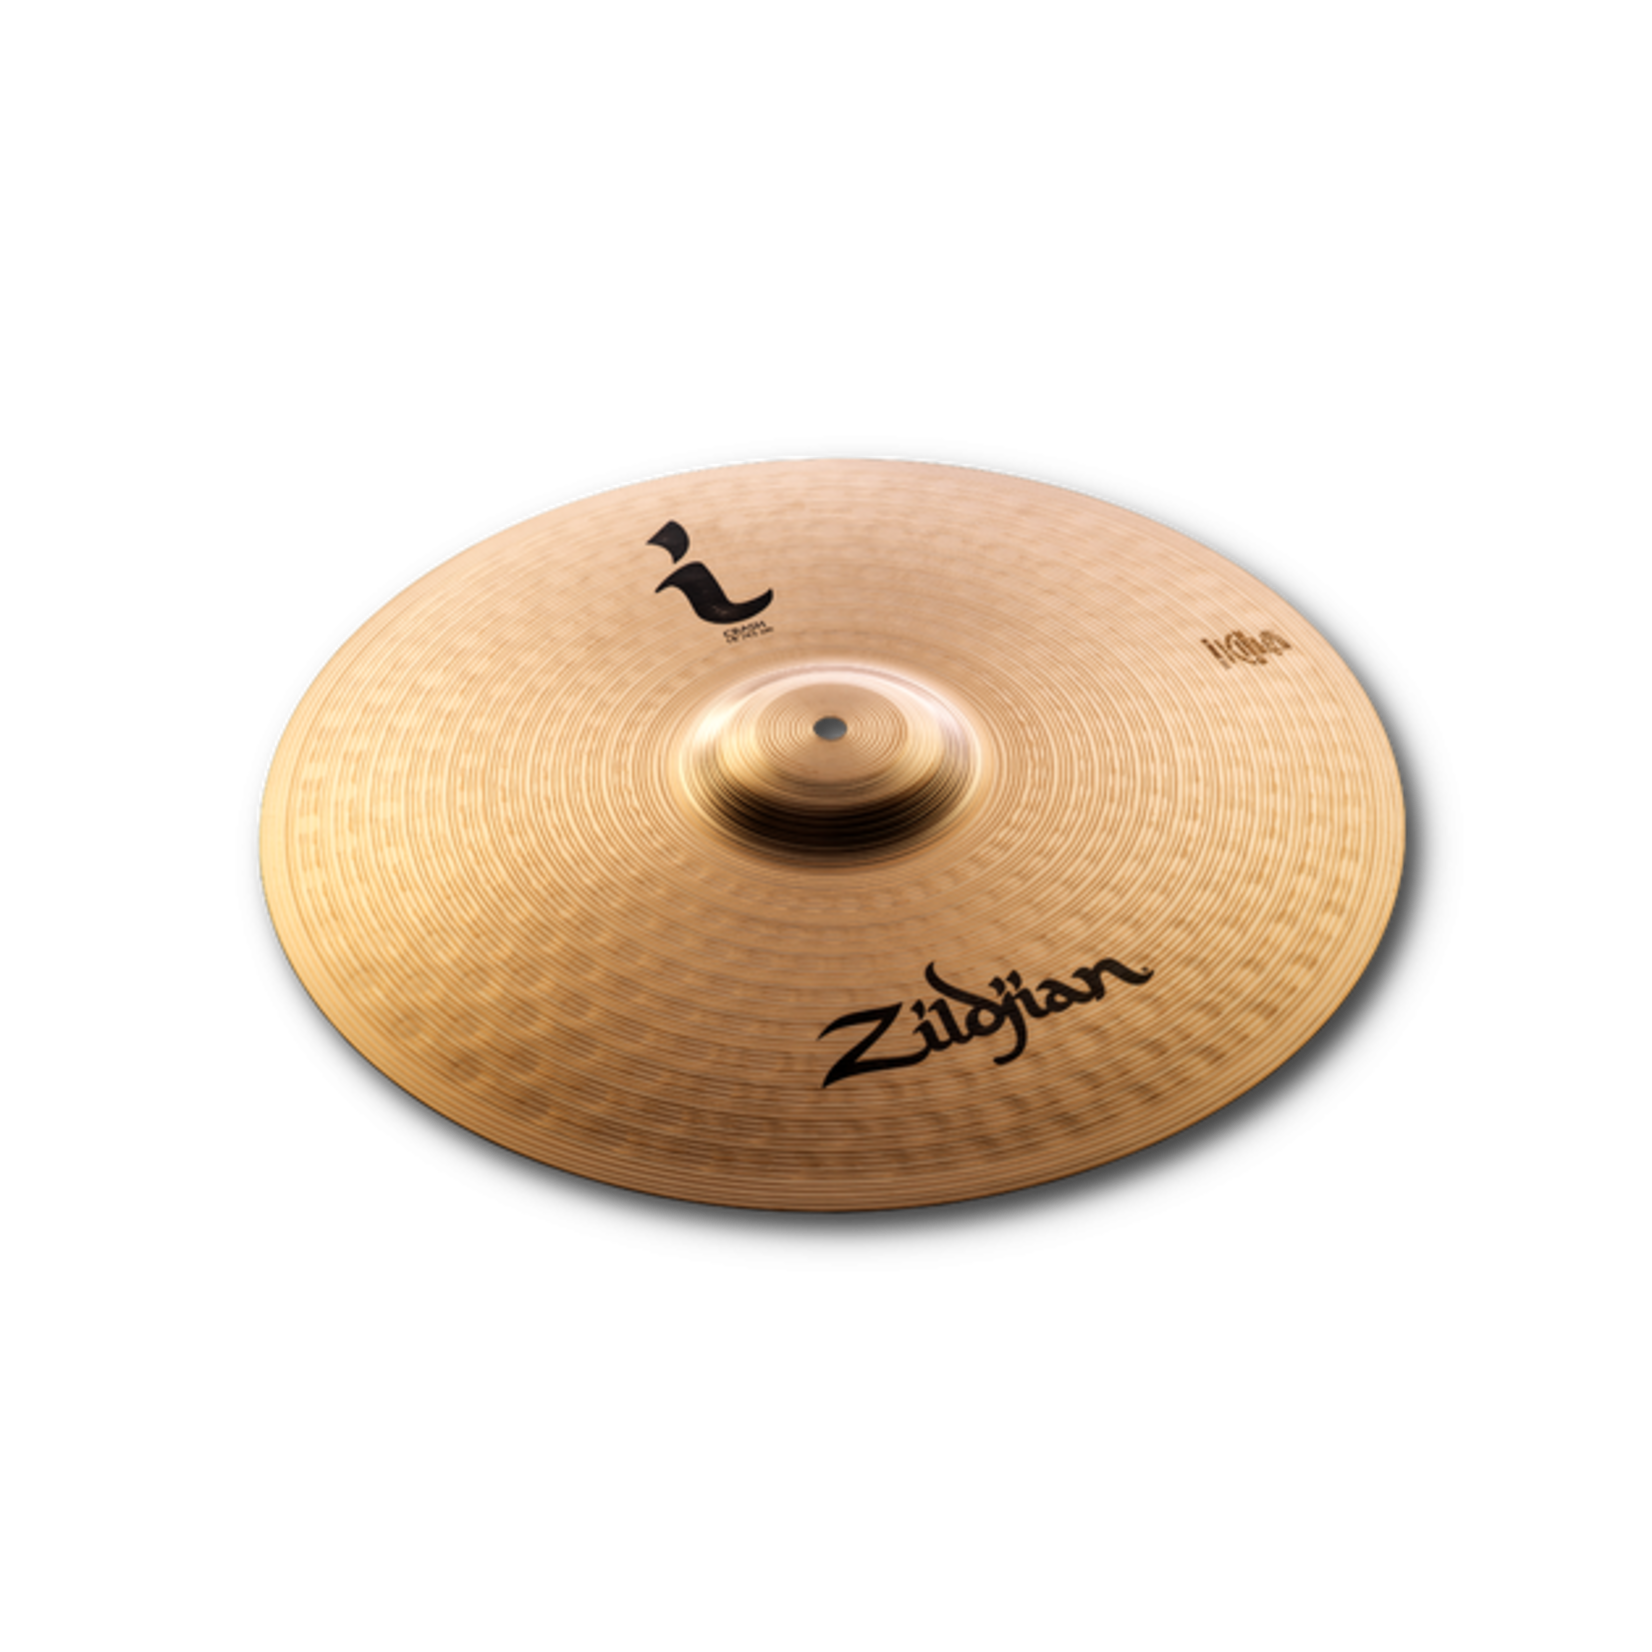 Zildjian i Series 18" Crash Cymbal